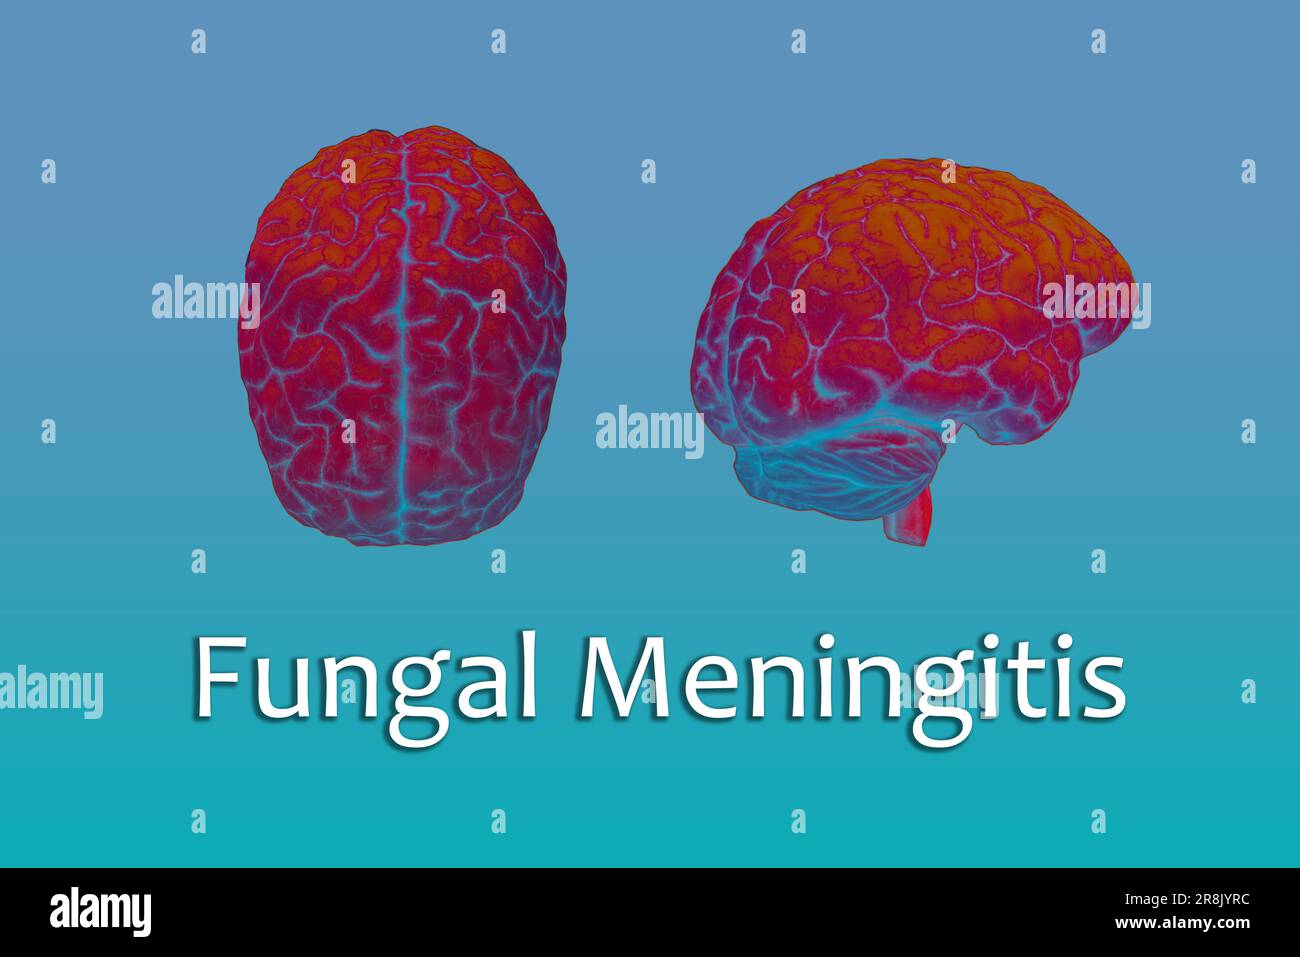 Meningitis symptoms hi-res stock photography and images - Alamy